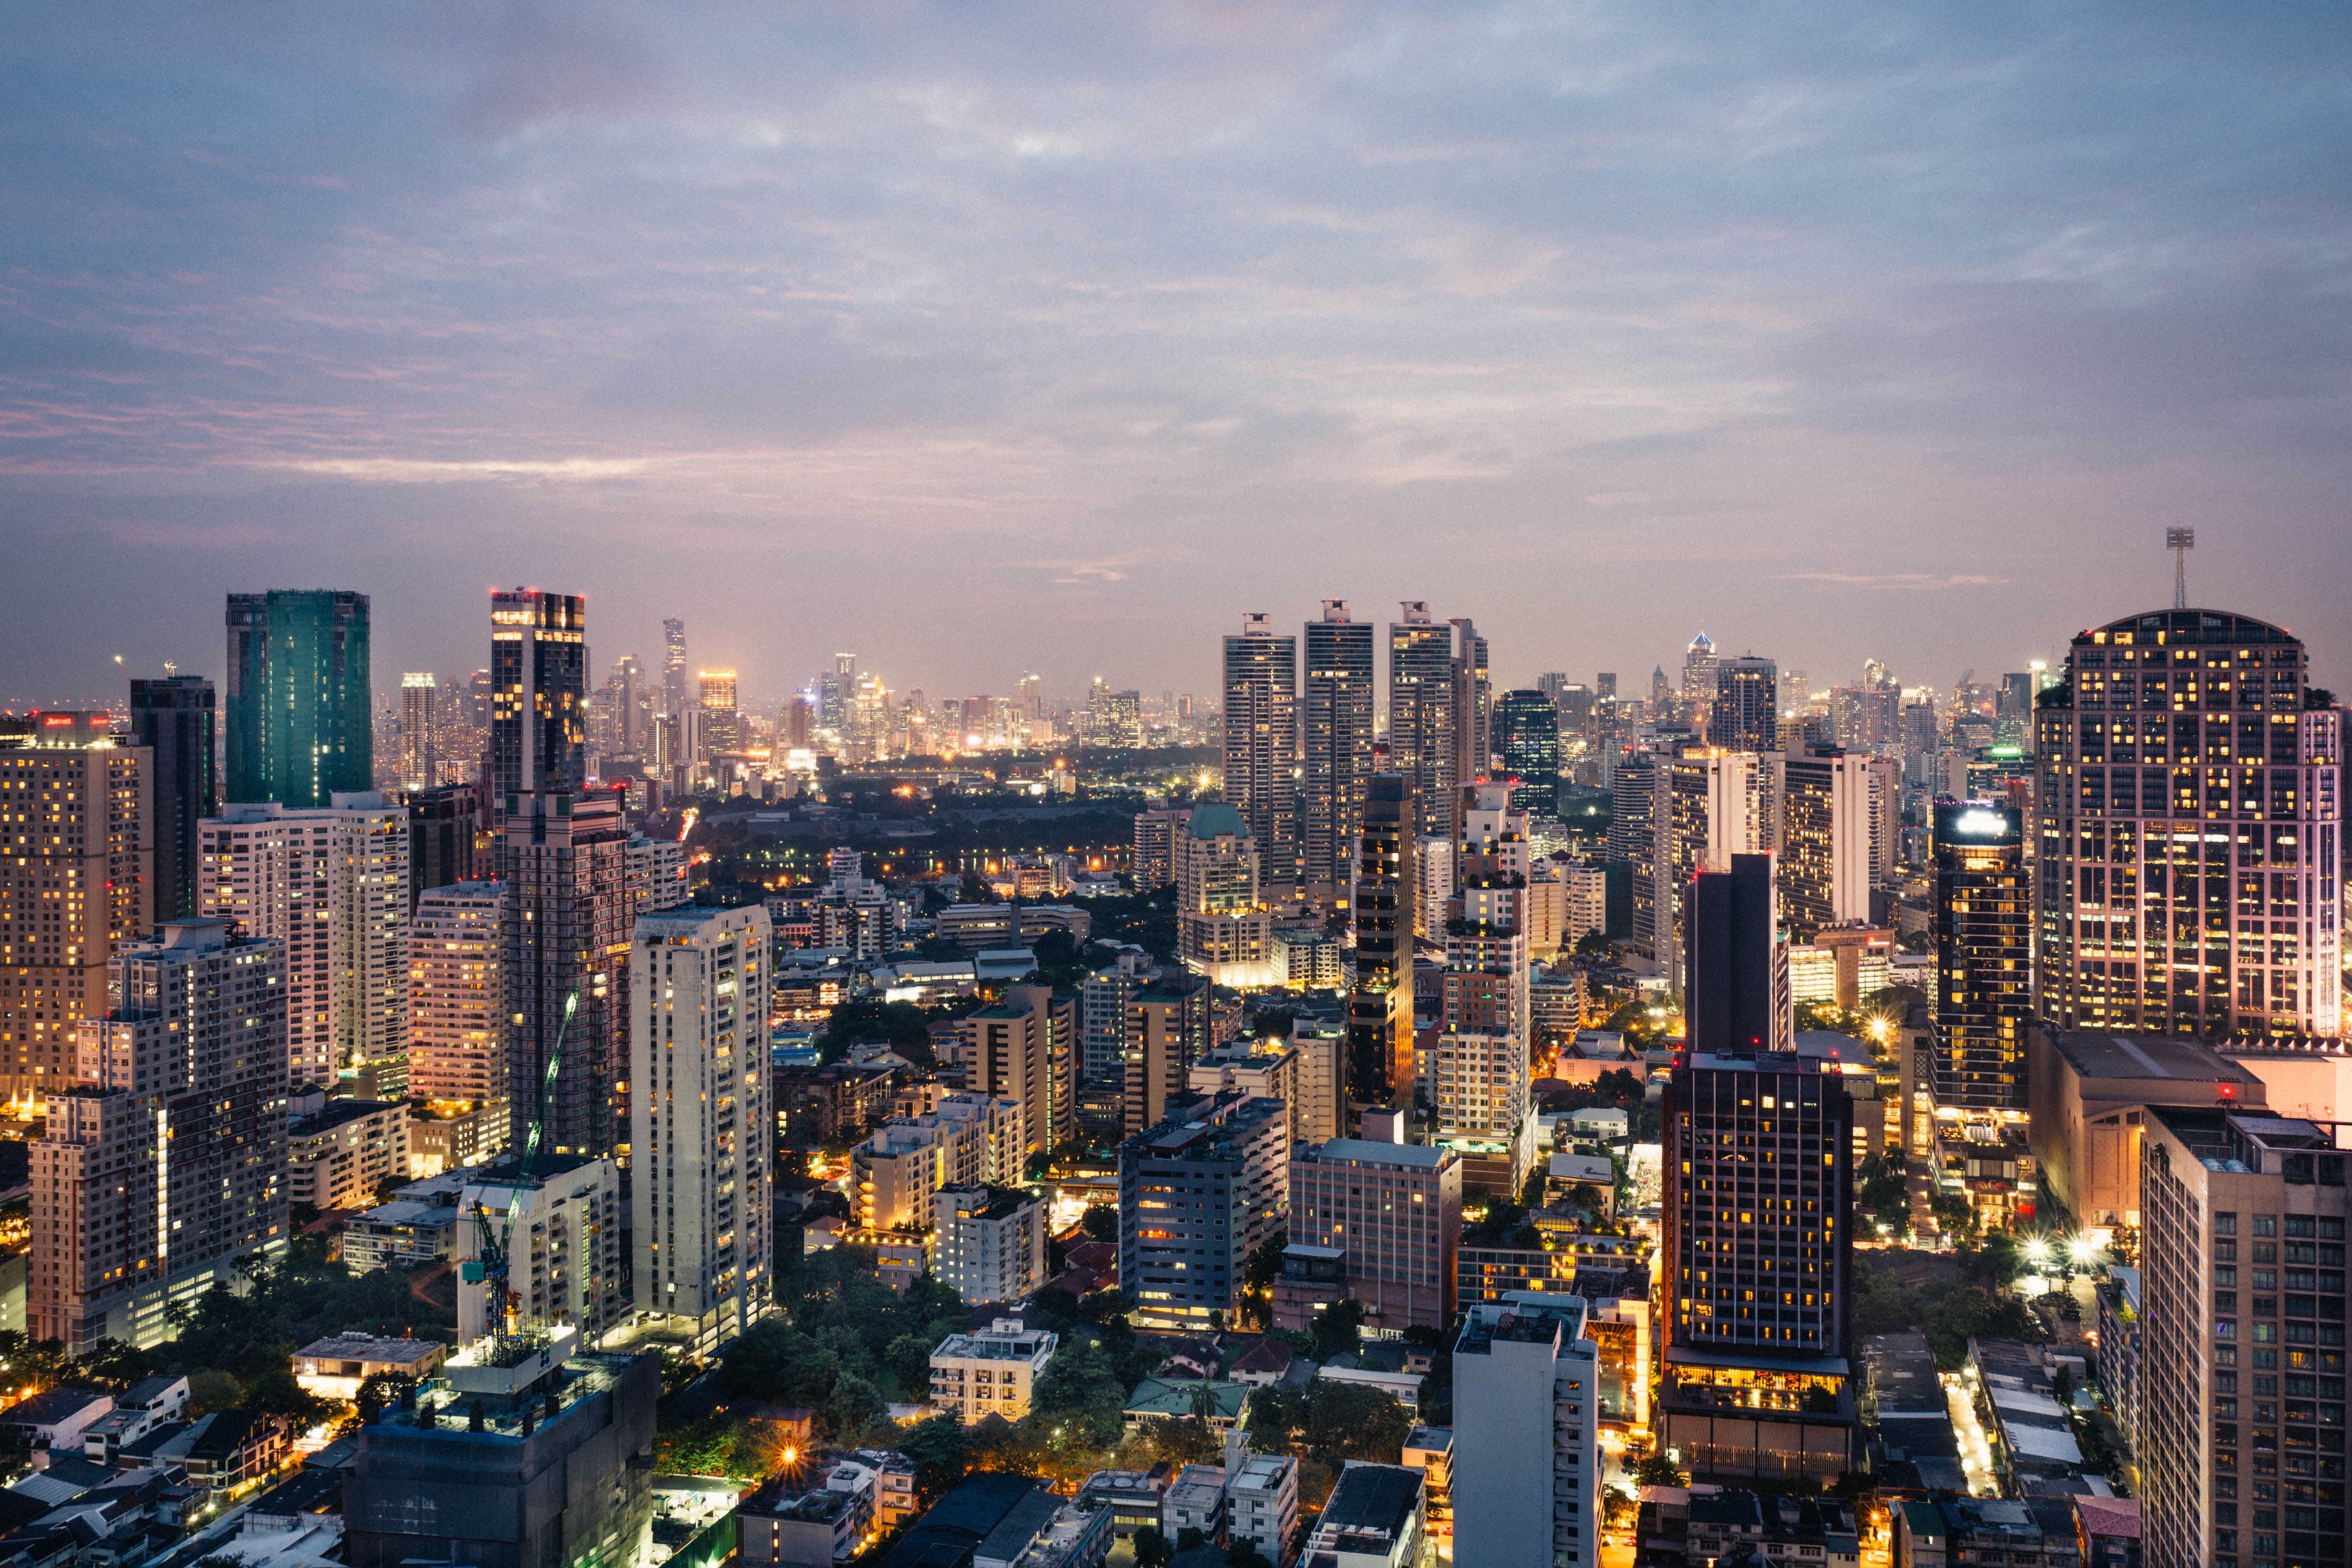 Cityscape of Bangkok Downtown

